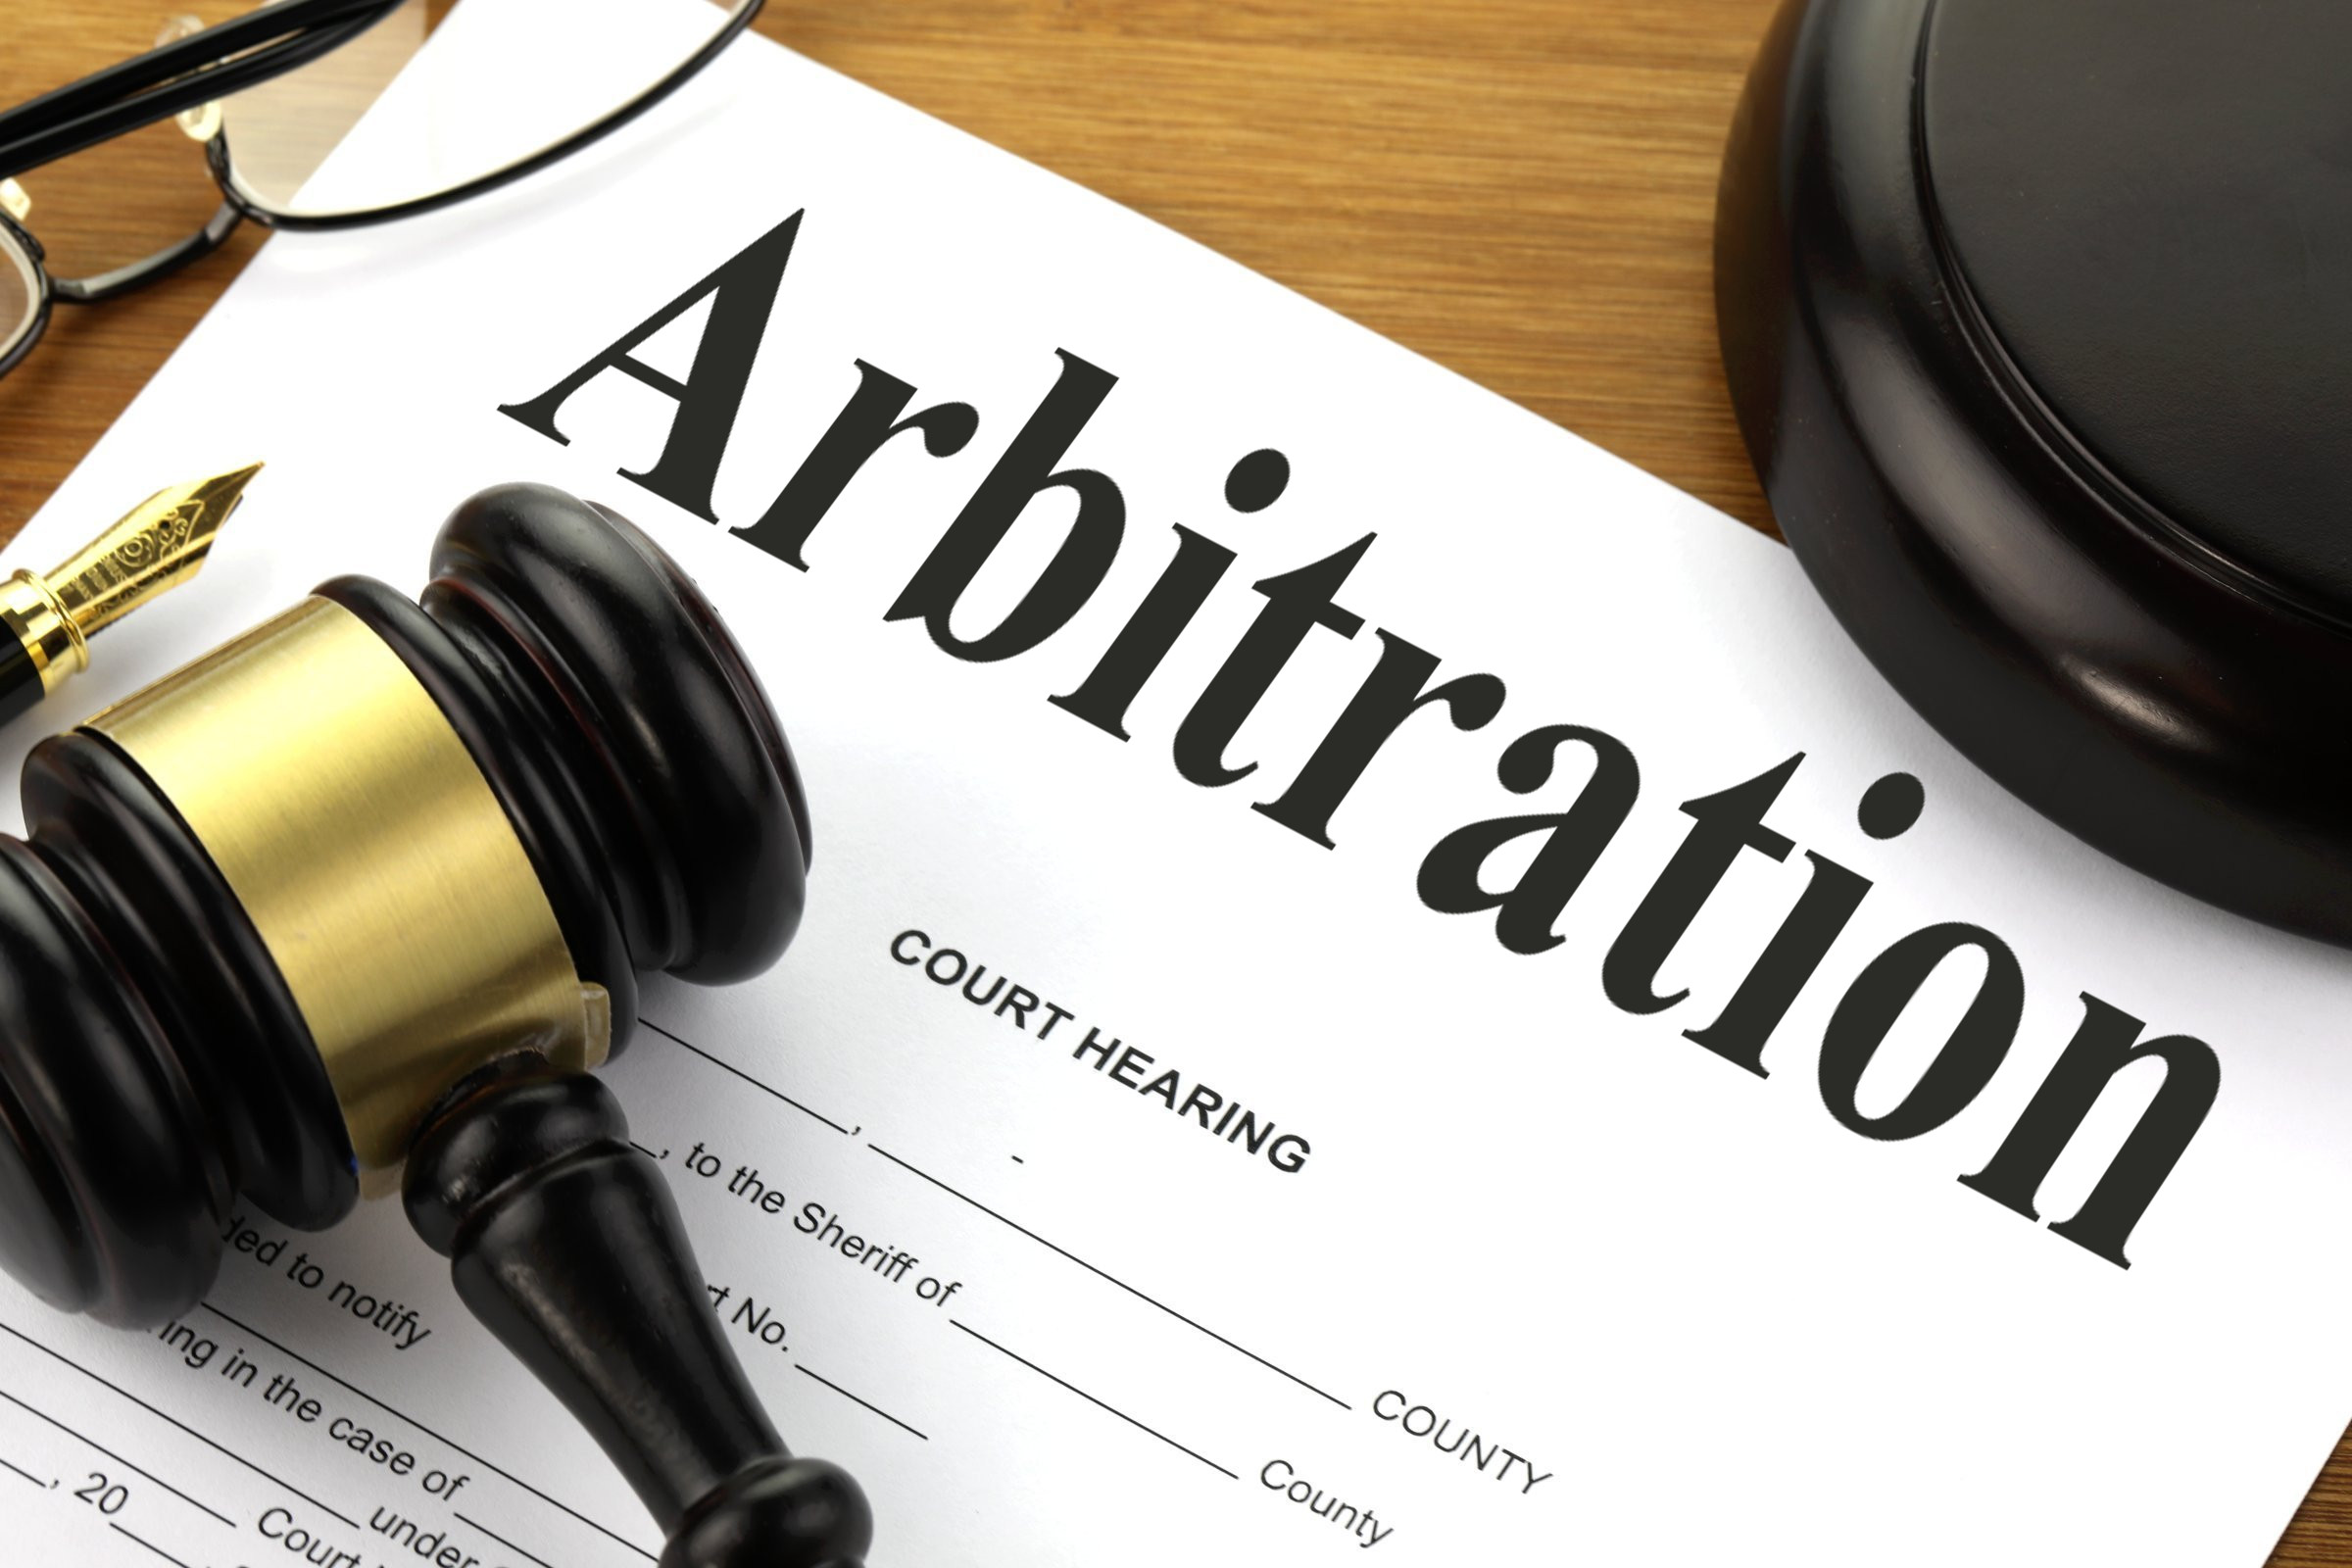 arbitration